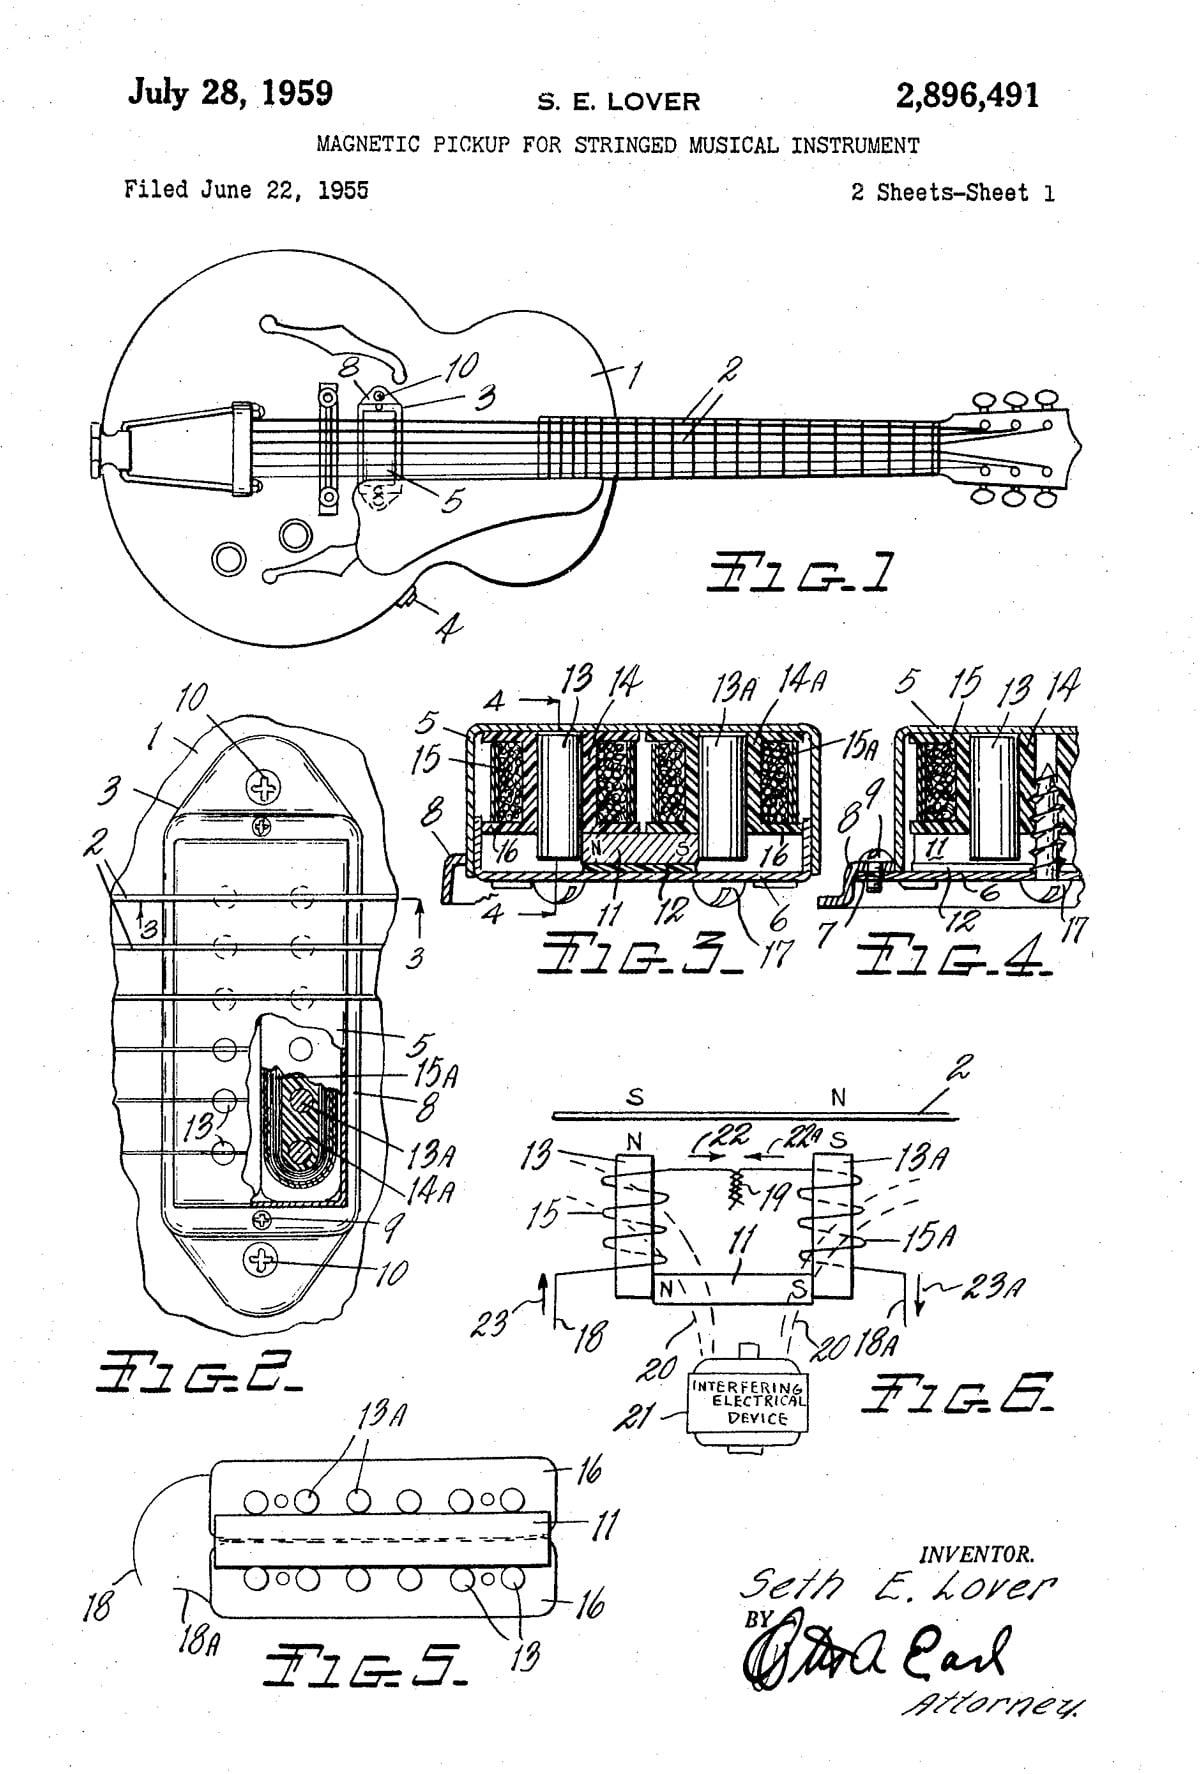 GibsonのP.A.Fの特許書類